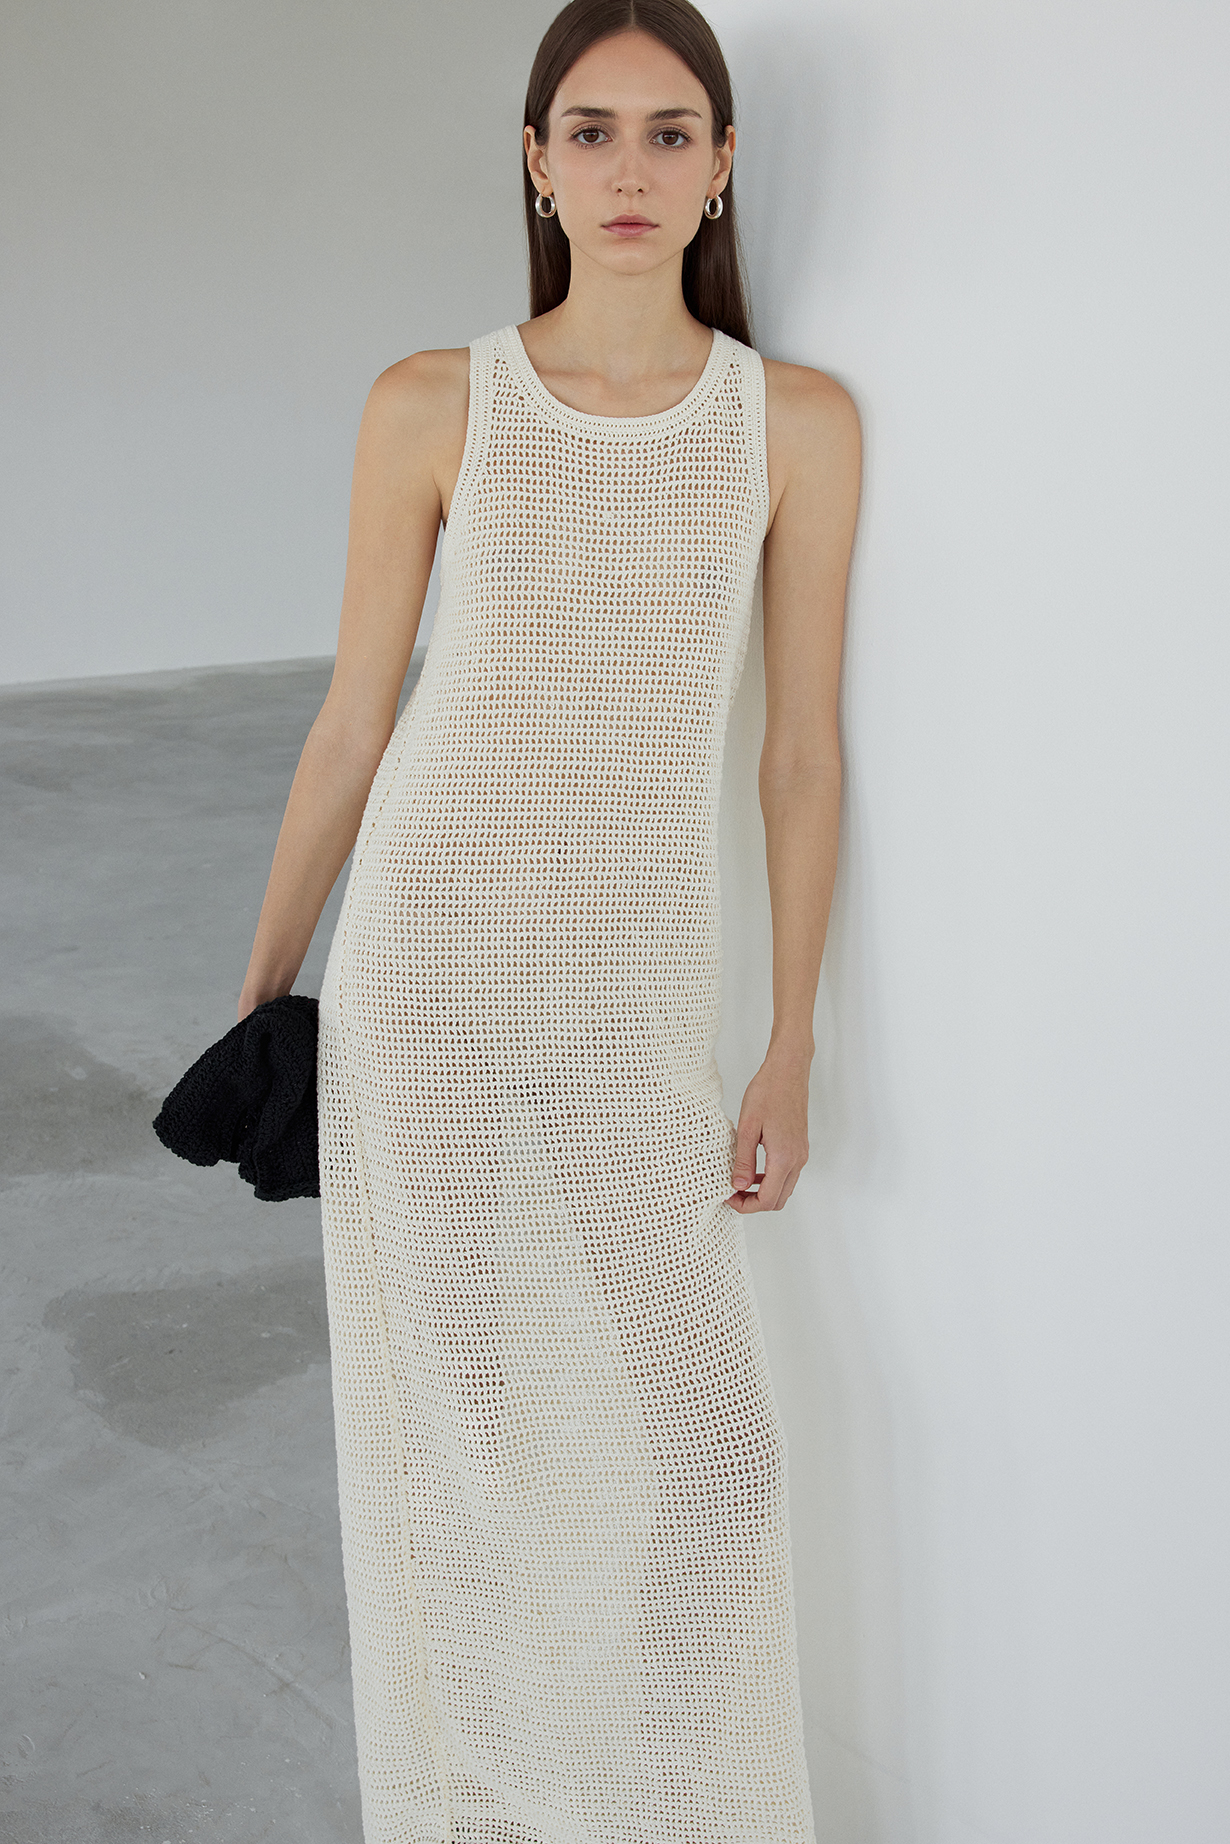 Dasha Crochet Dress in Ivory